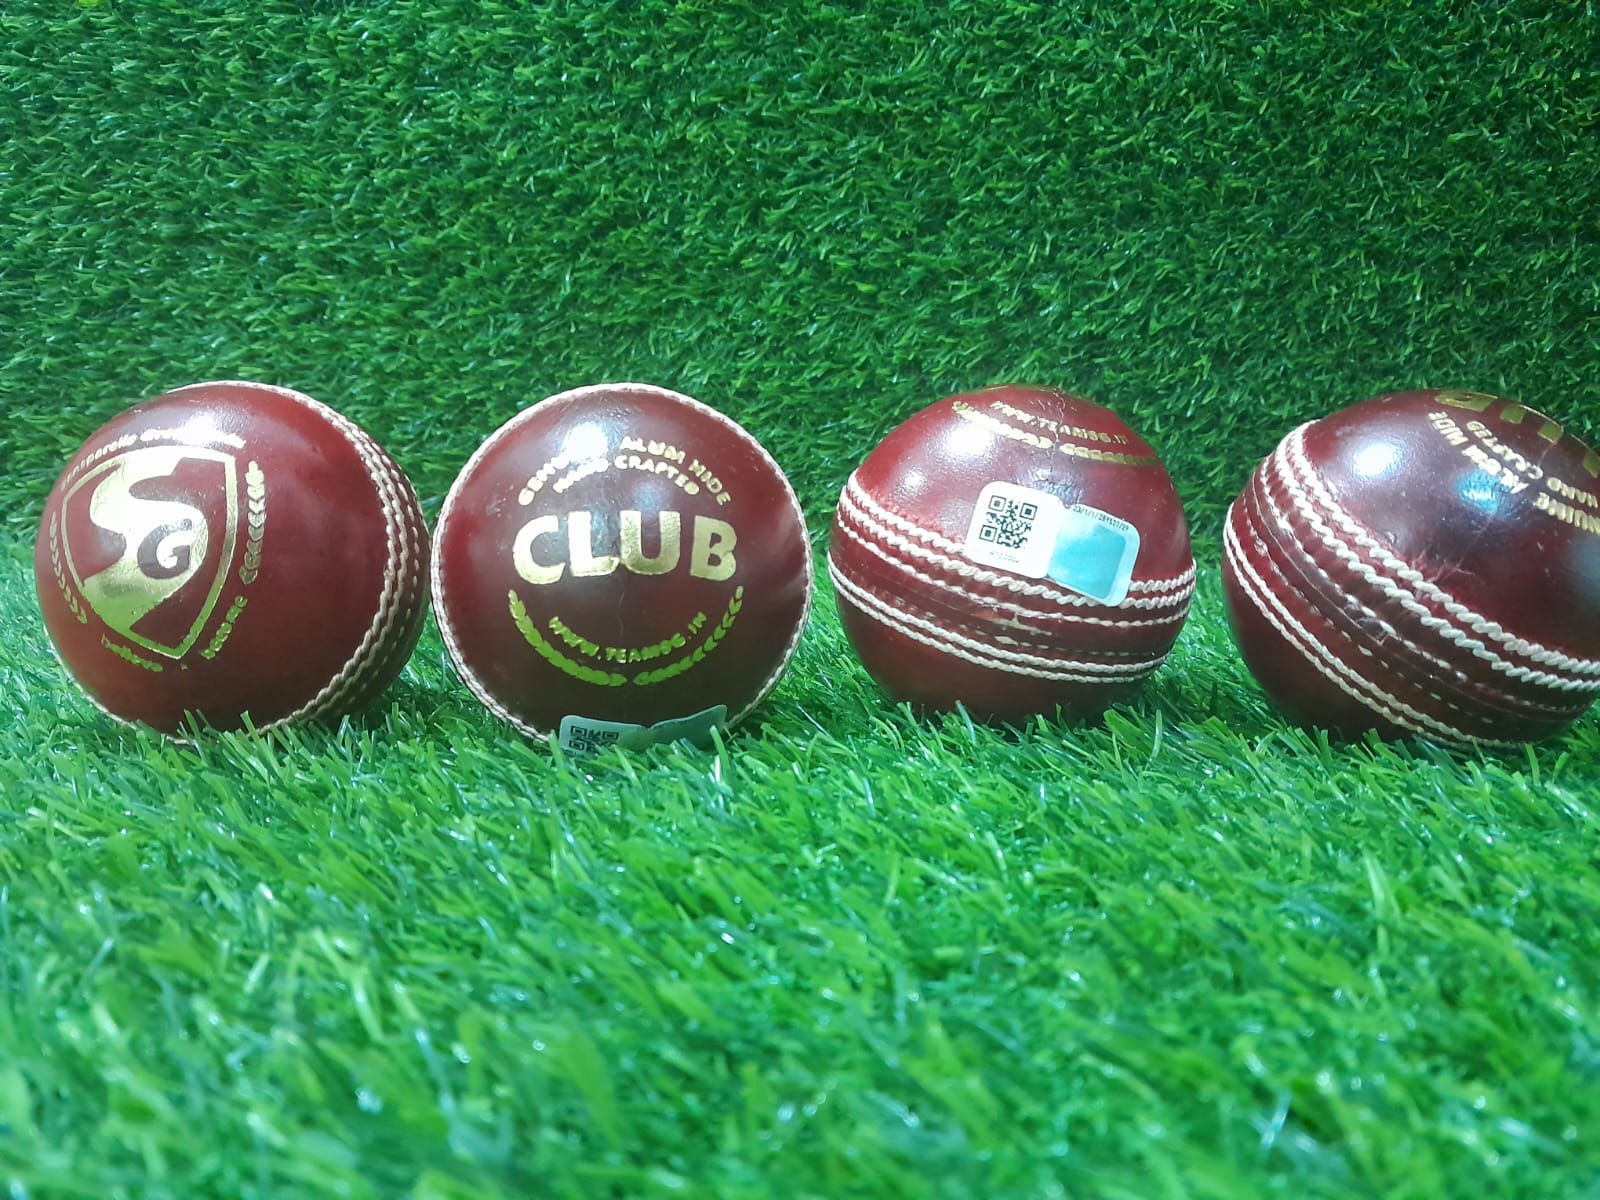 SG Club Red Cricket Ball 6 Ball set